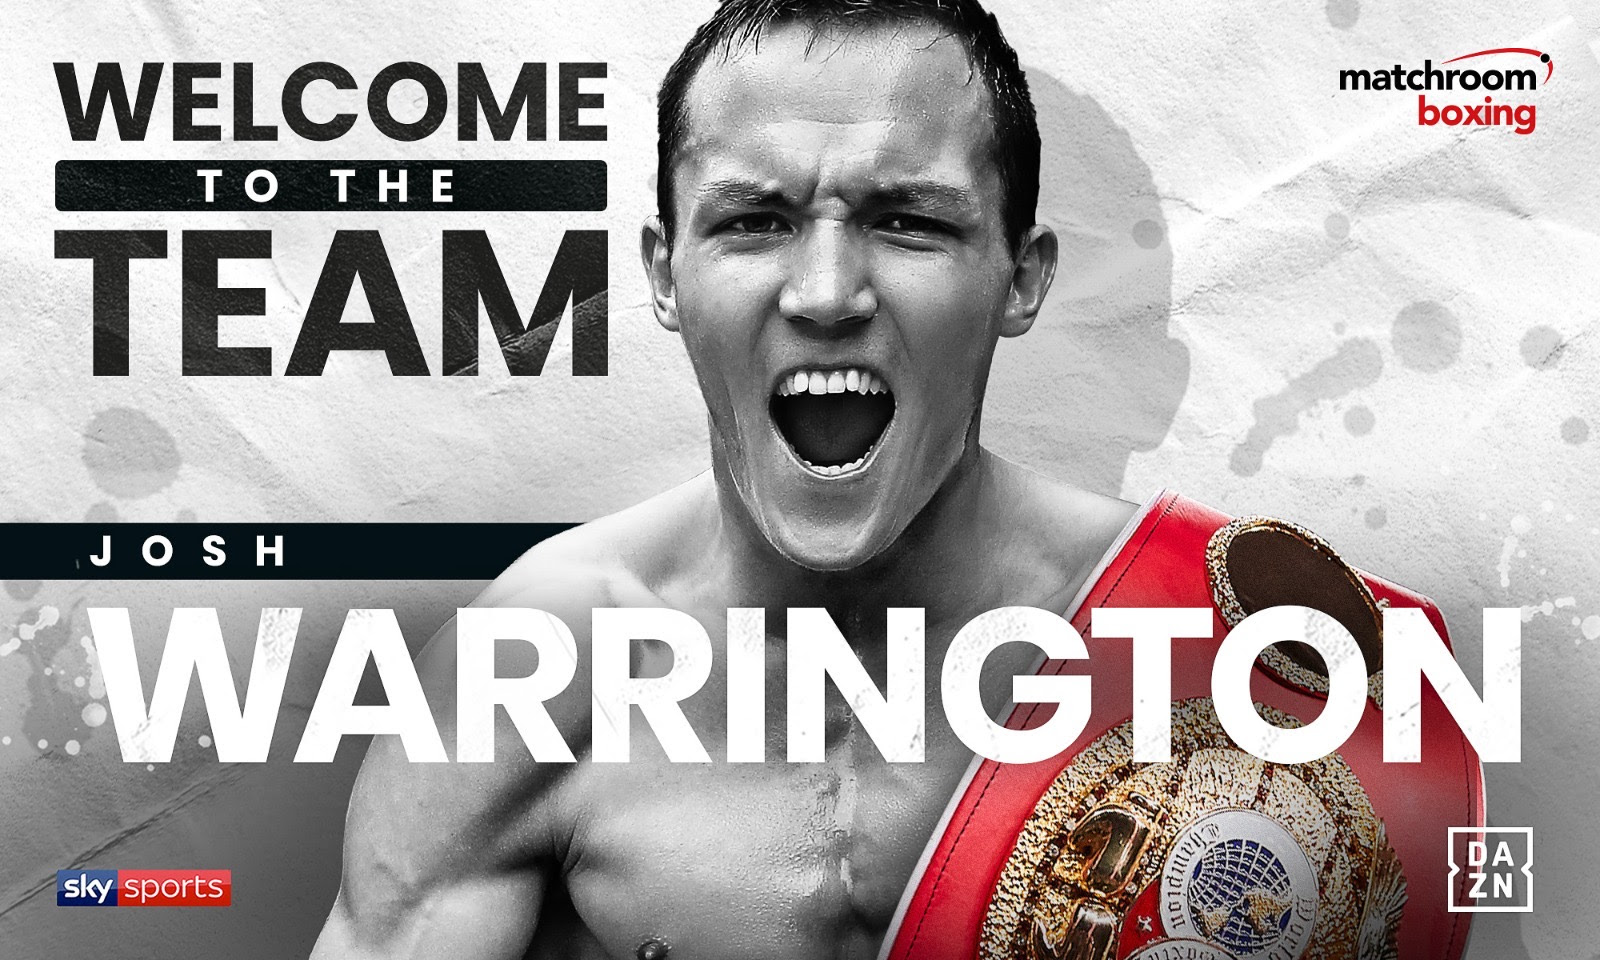 Josh Warrington (Matchroom Boxing)